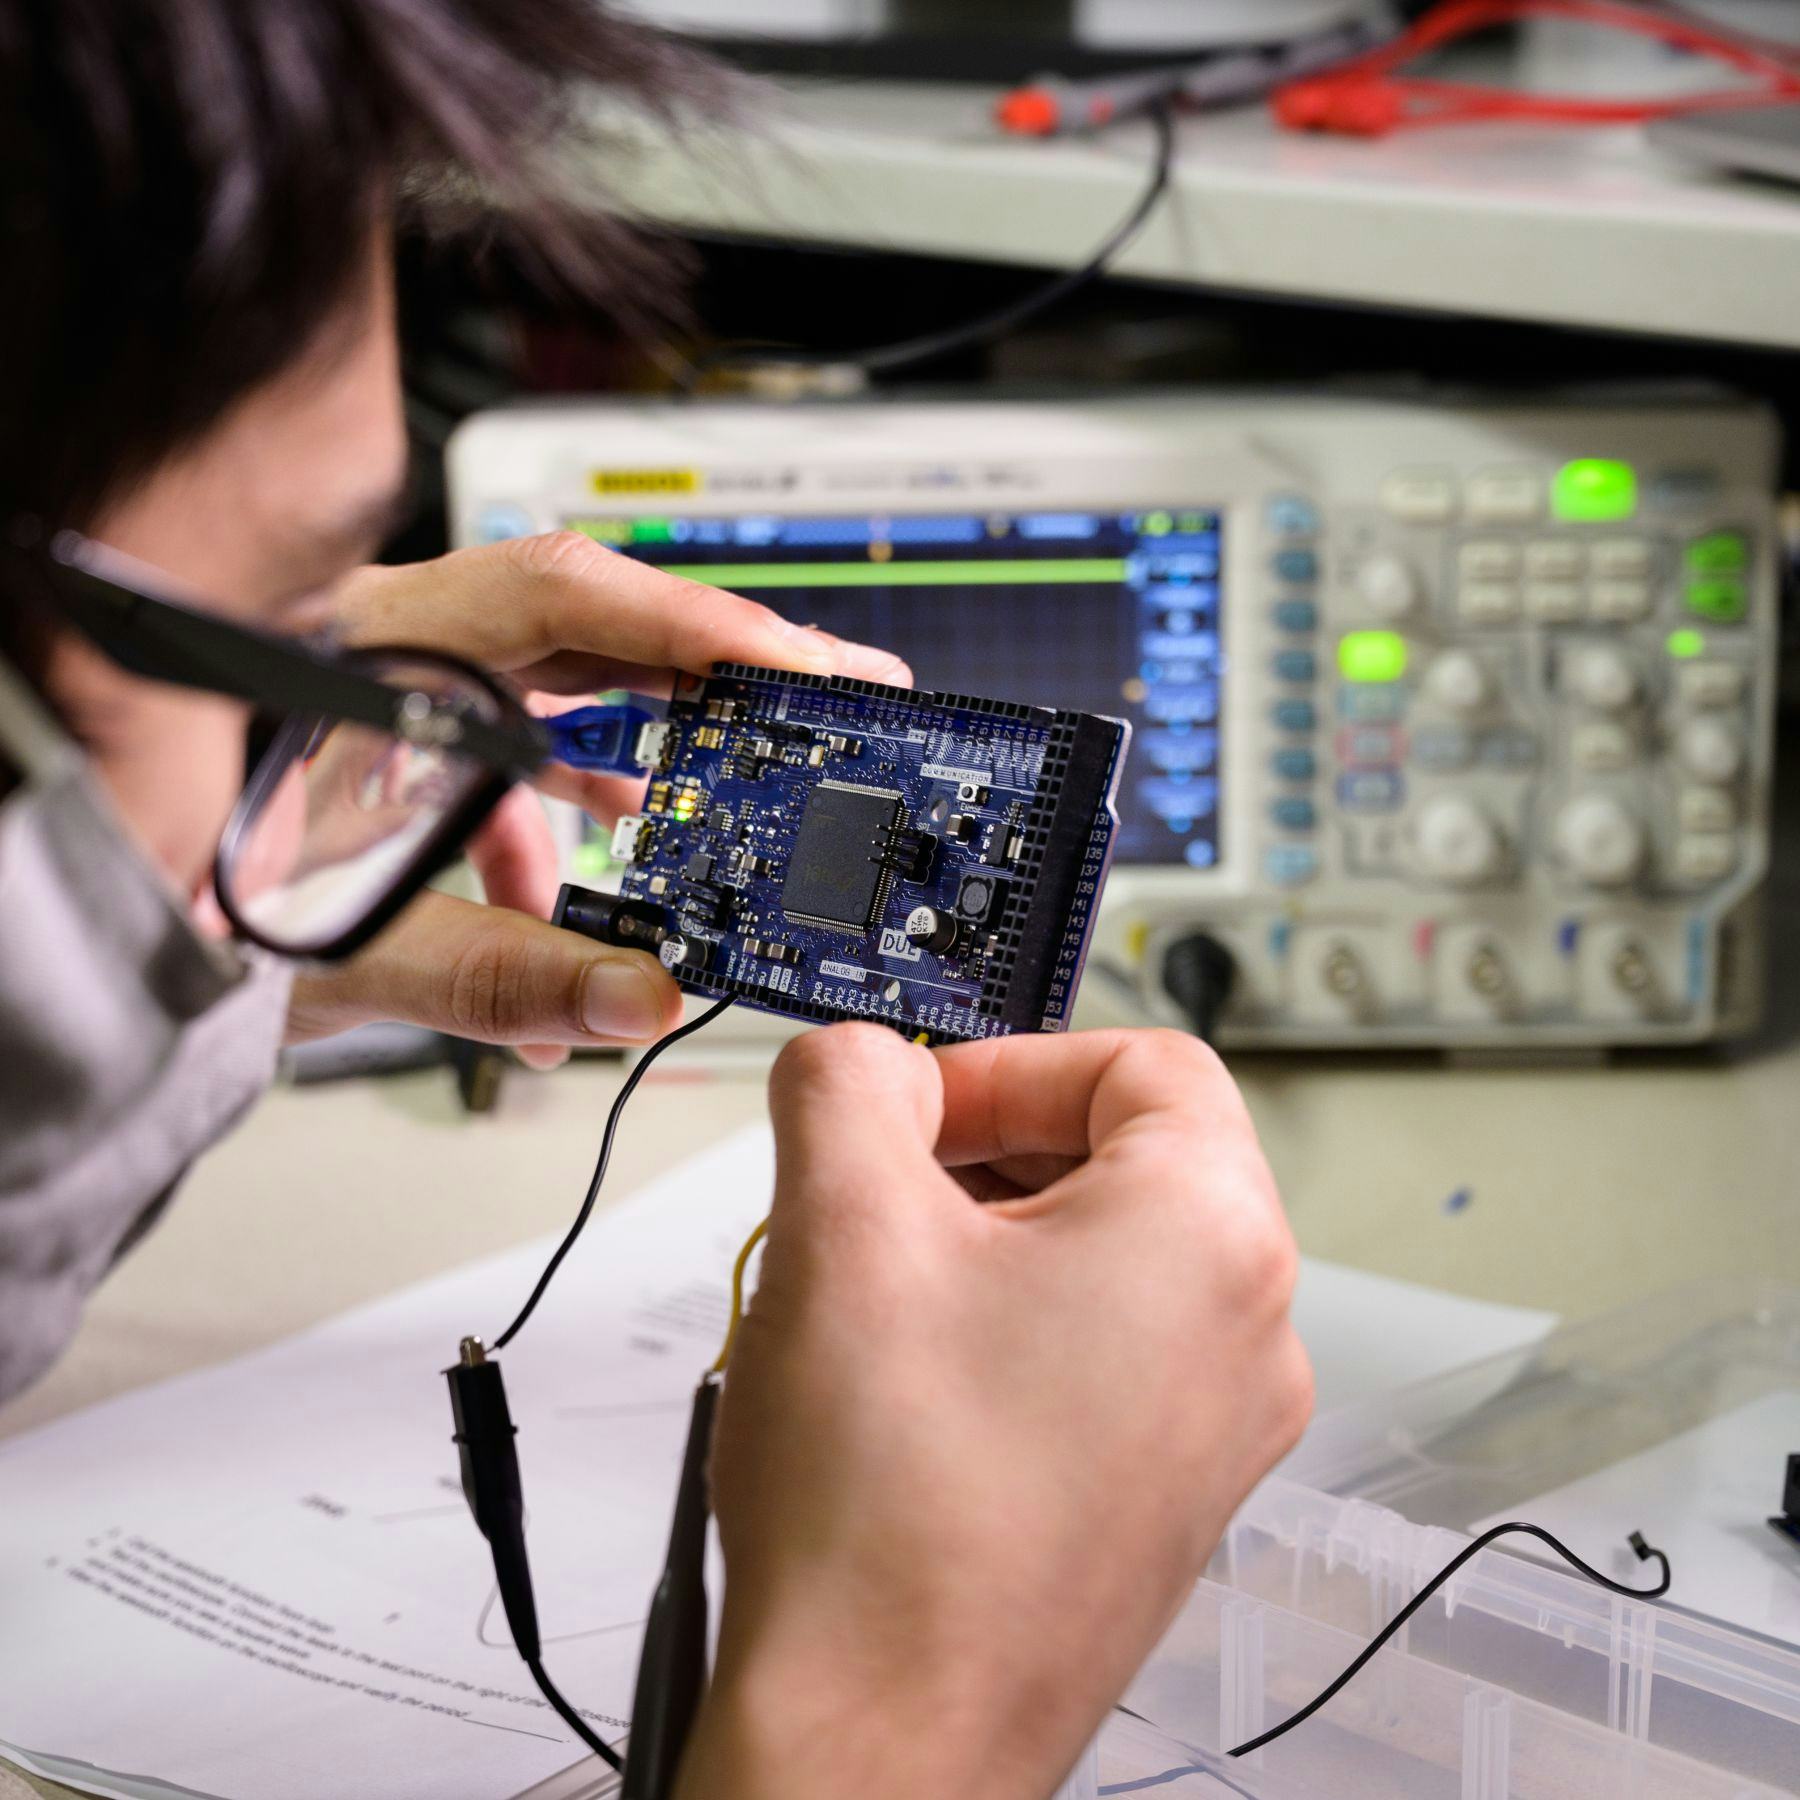 Student wearing glasses adjusts circuit board